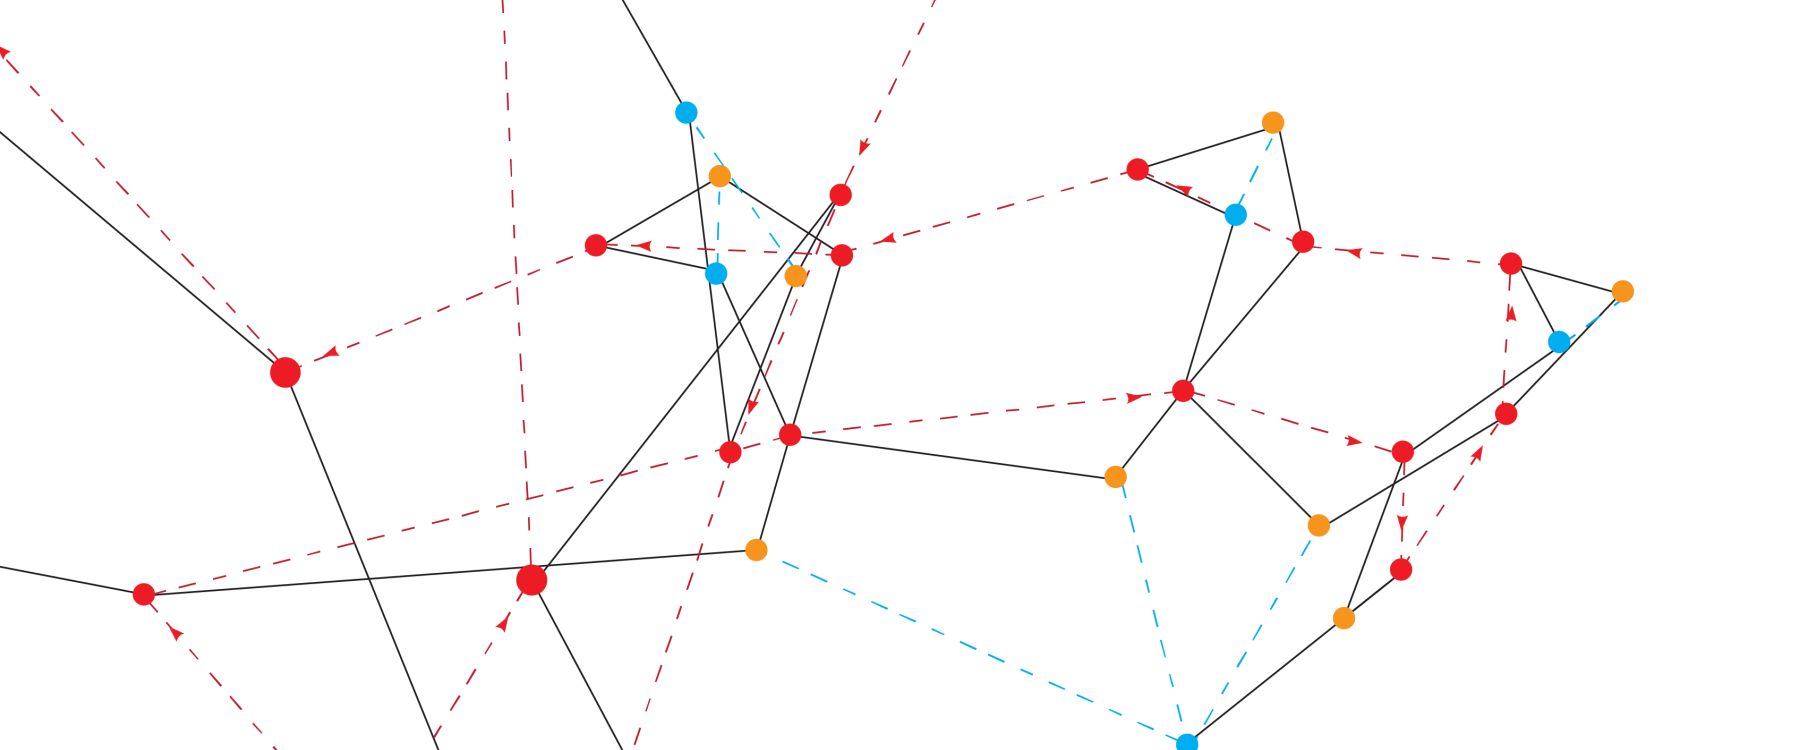 fi: tyylitelty graafi GenoGraphiX-LOG-ohjelmasta / en: illustration of a graph from GenoGraphiX-LOG software